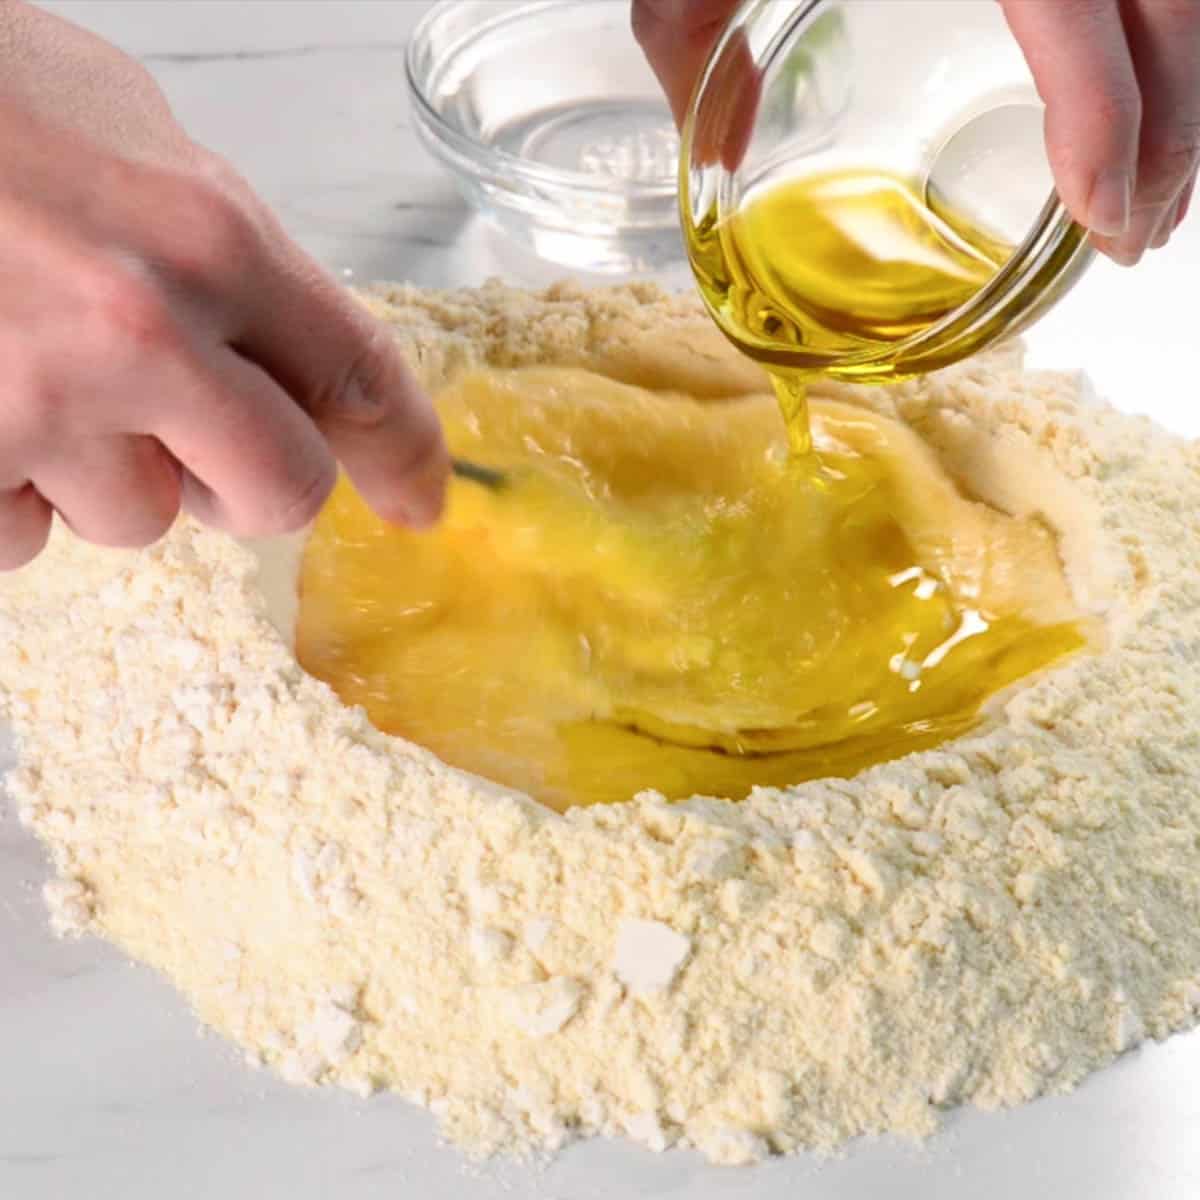 adding oil to homemade pasta dough.